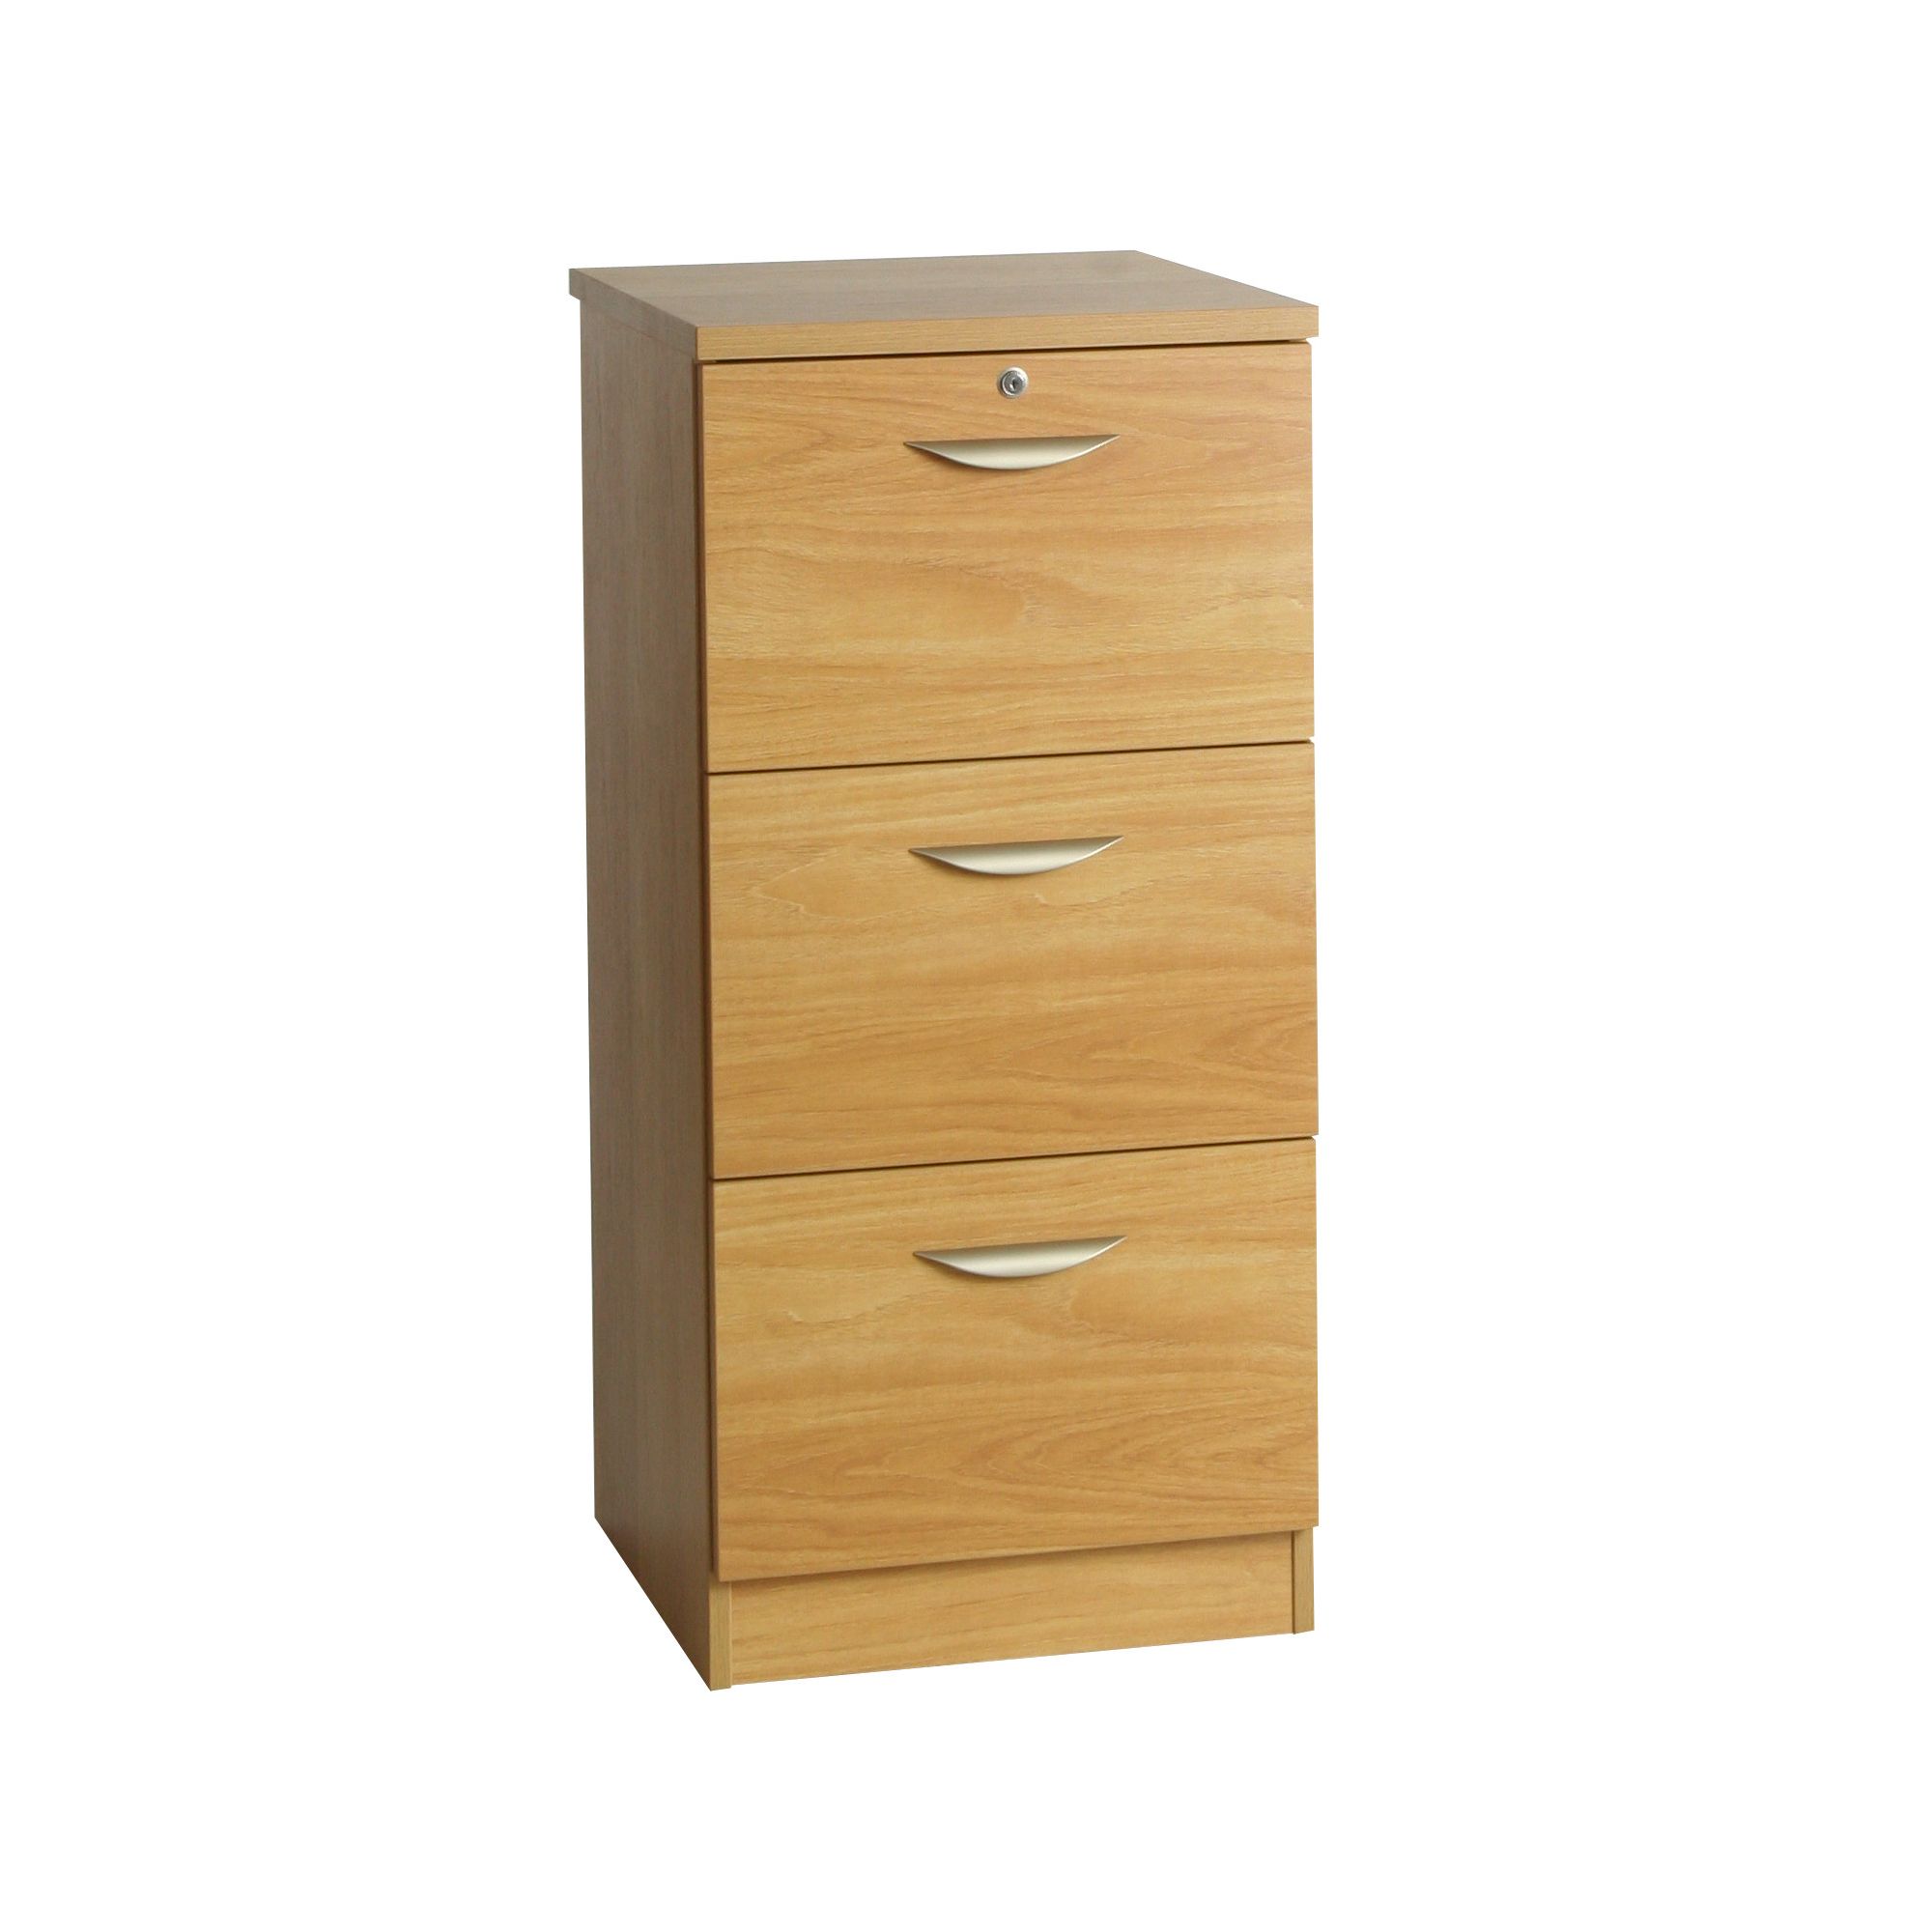 Enduro Three Drawer Tall Wooden Filing Cabinet - Teak at Tesco Direct